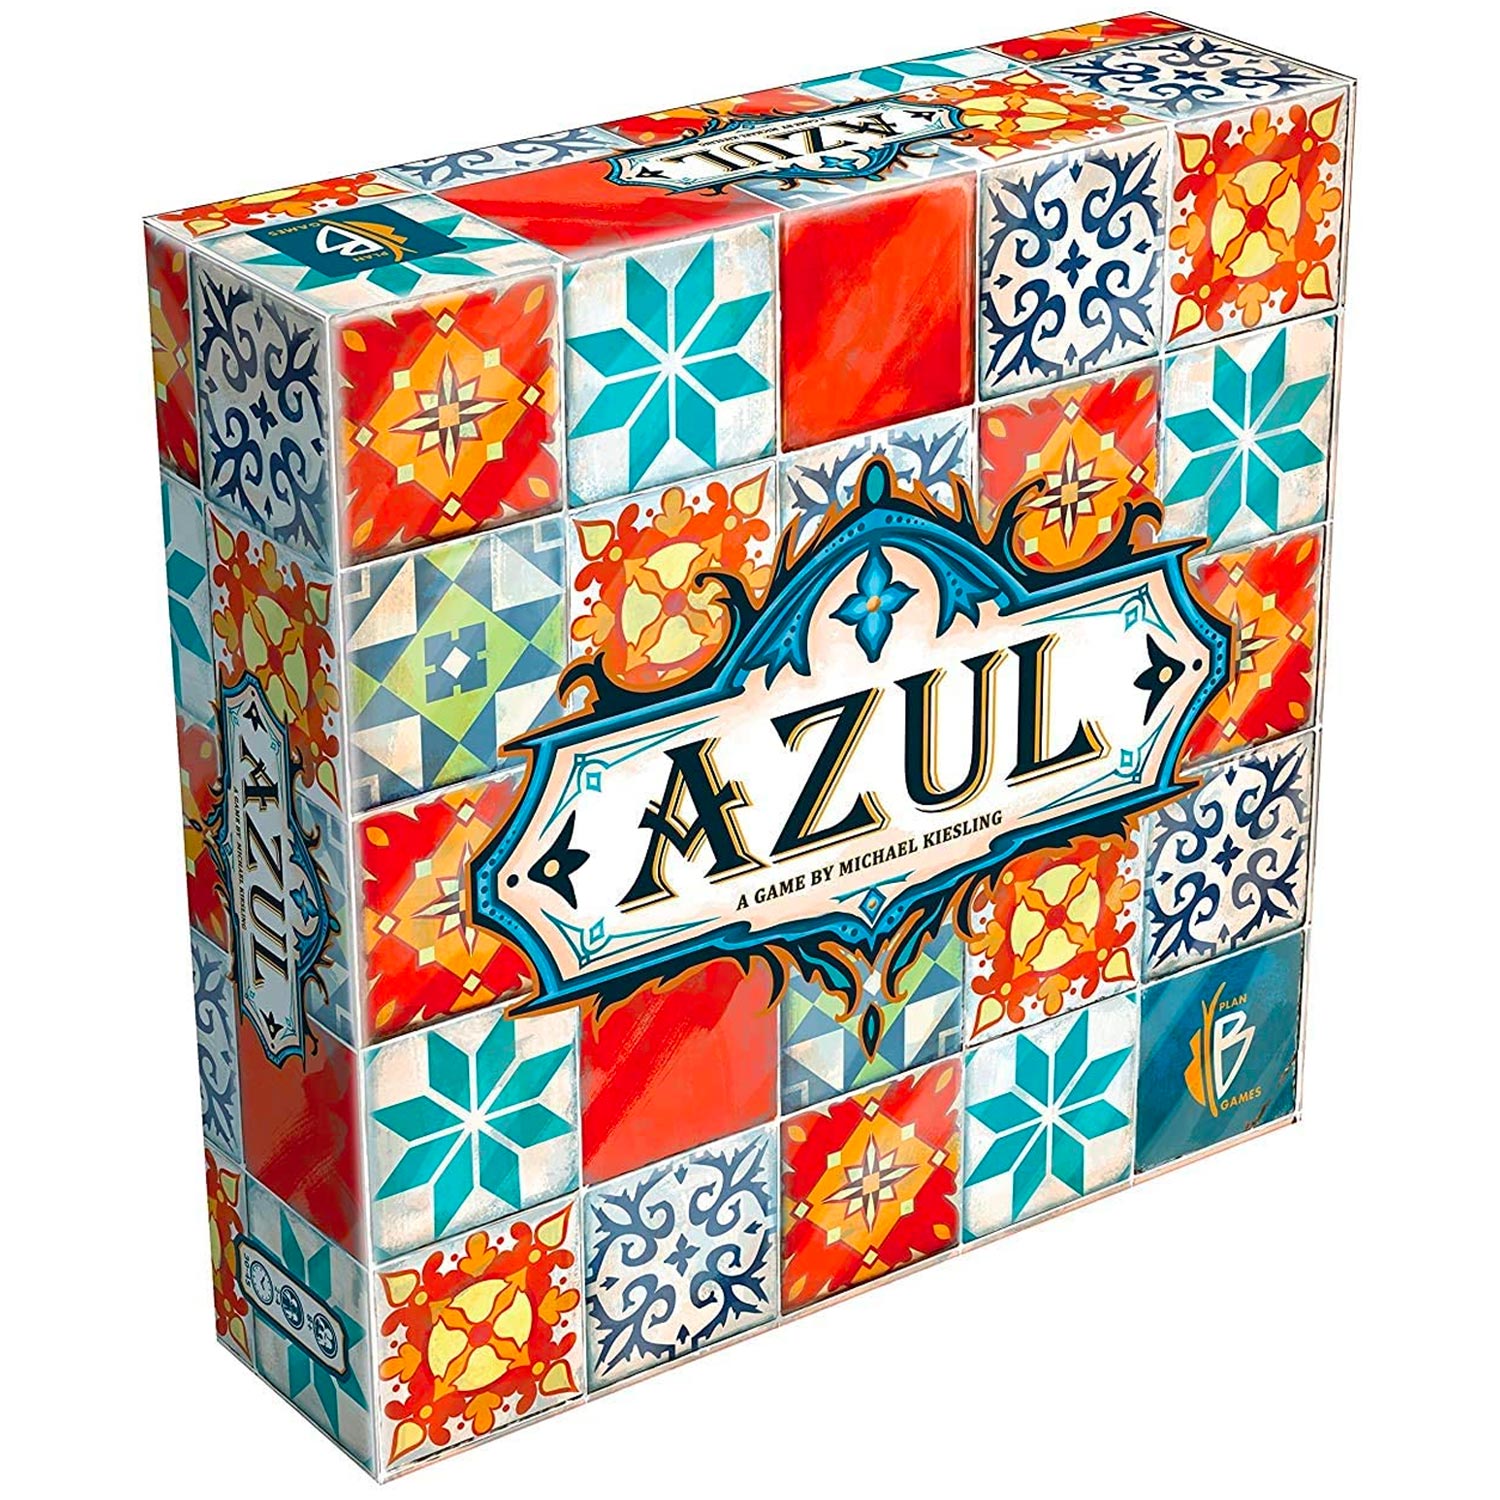 The box of Azul.